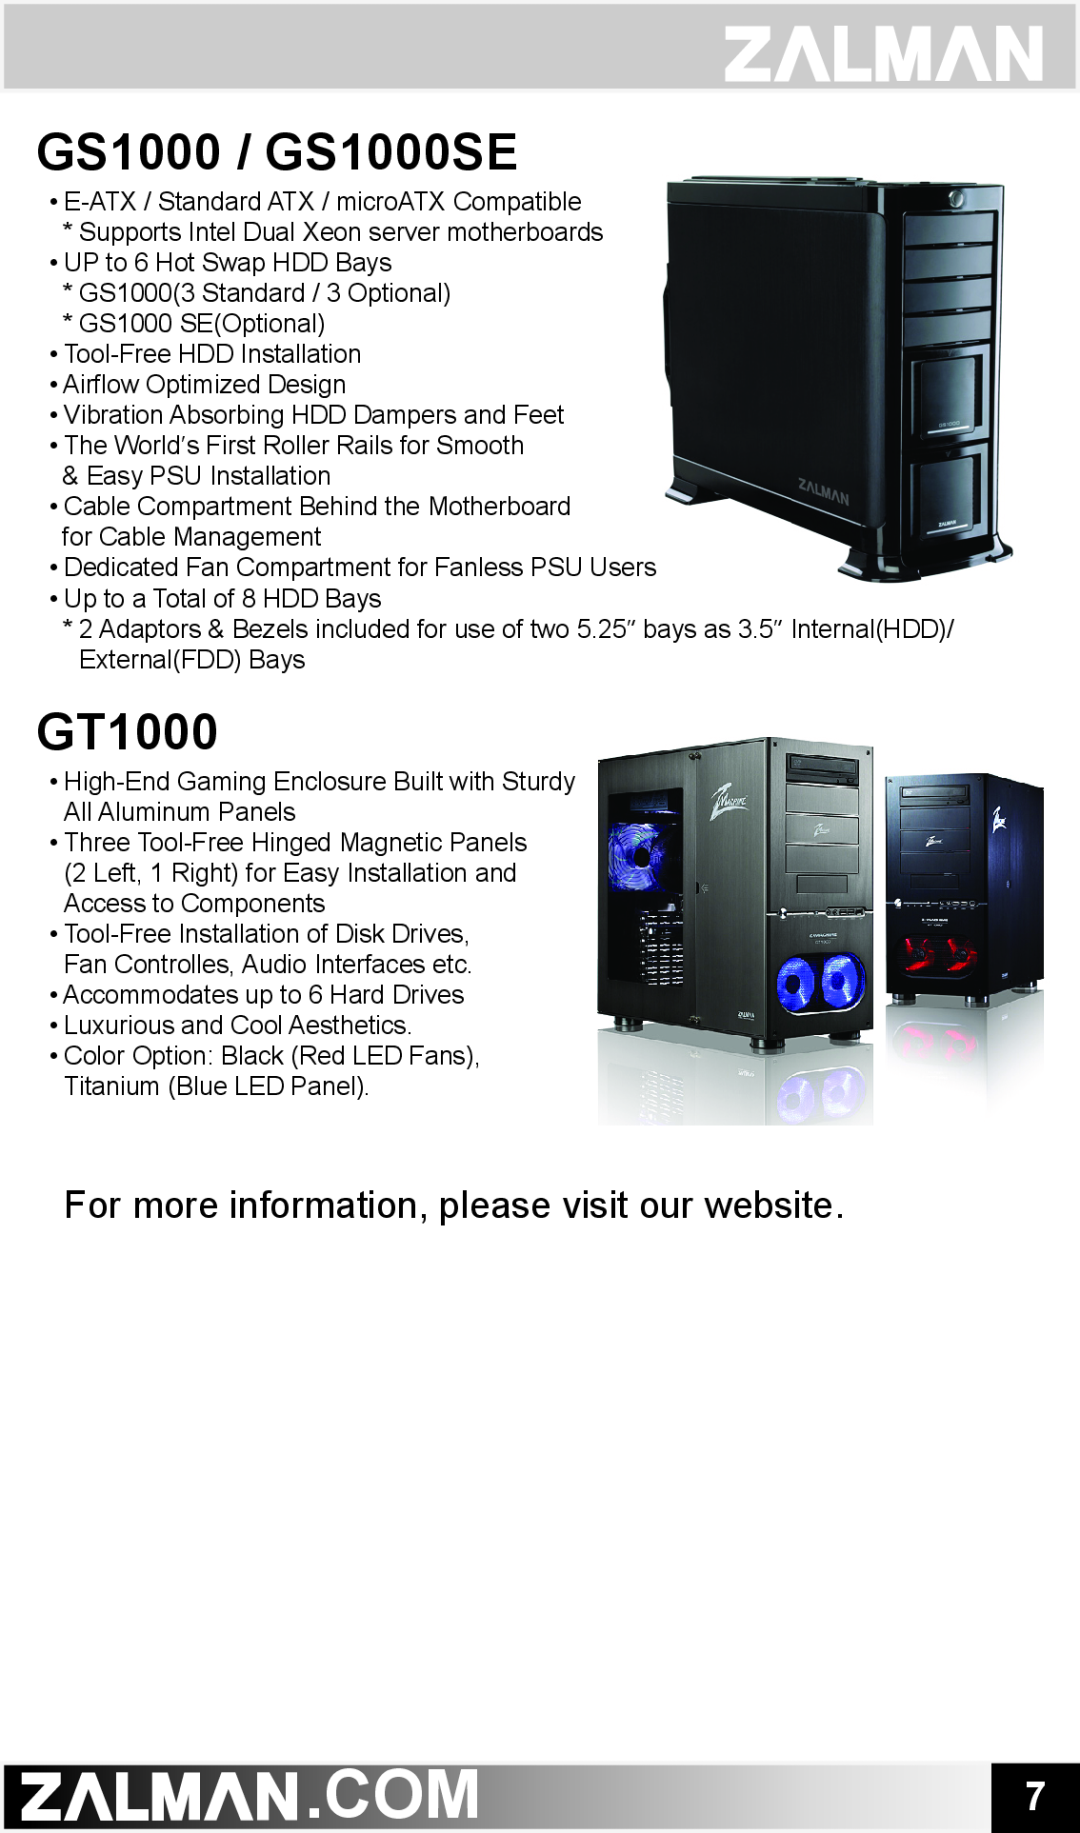 ZALMAN CNPS7700 user manual For more information, please visit our website, GS1000 / GS1000SE, GT1000 